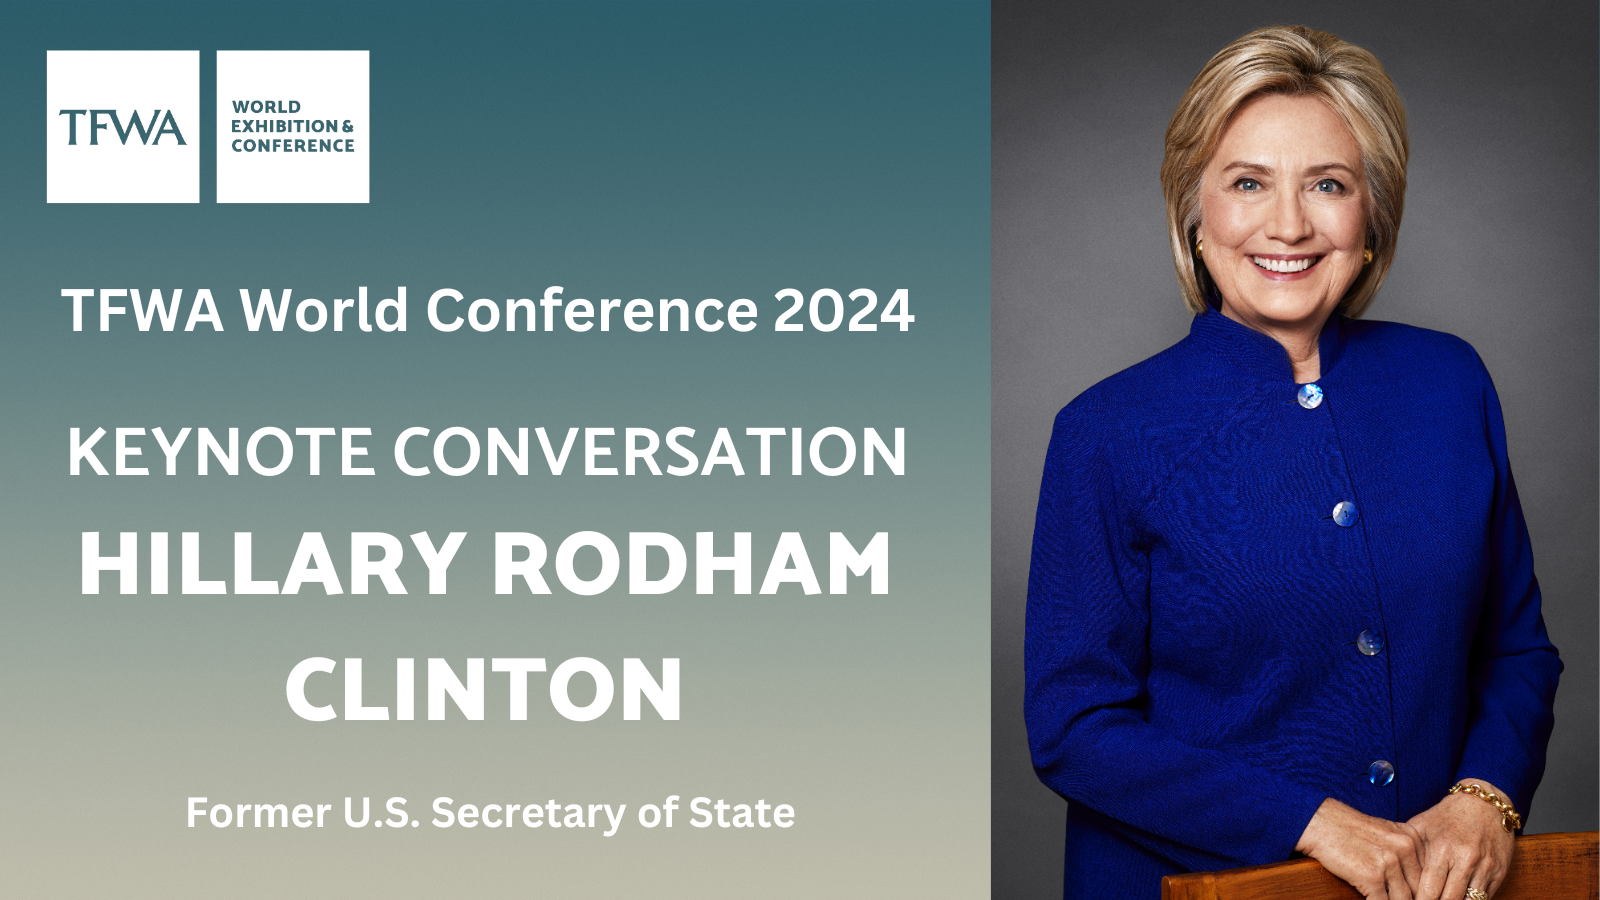 Hillary Rodham Clinton to headline TFWA World Conference with keynote conversation